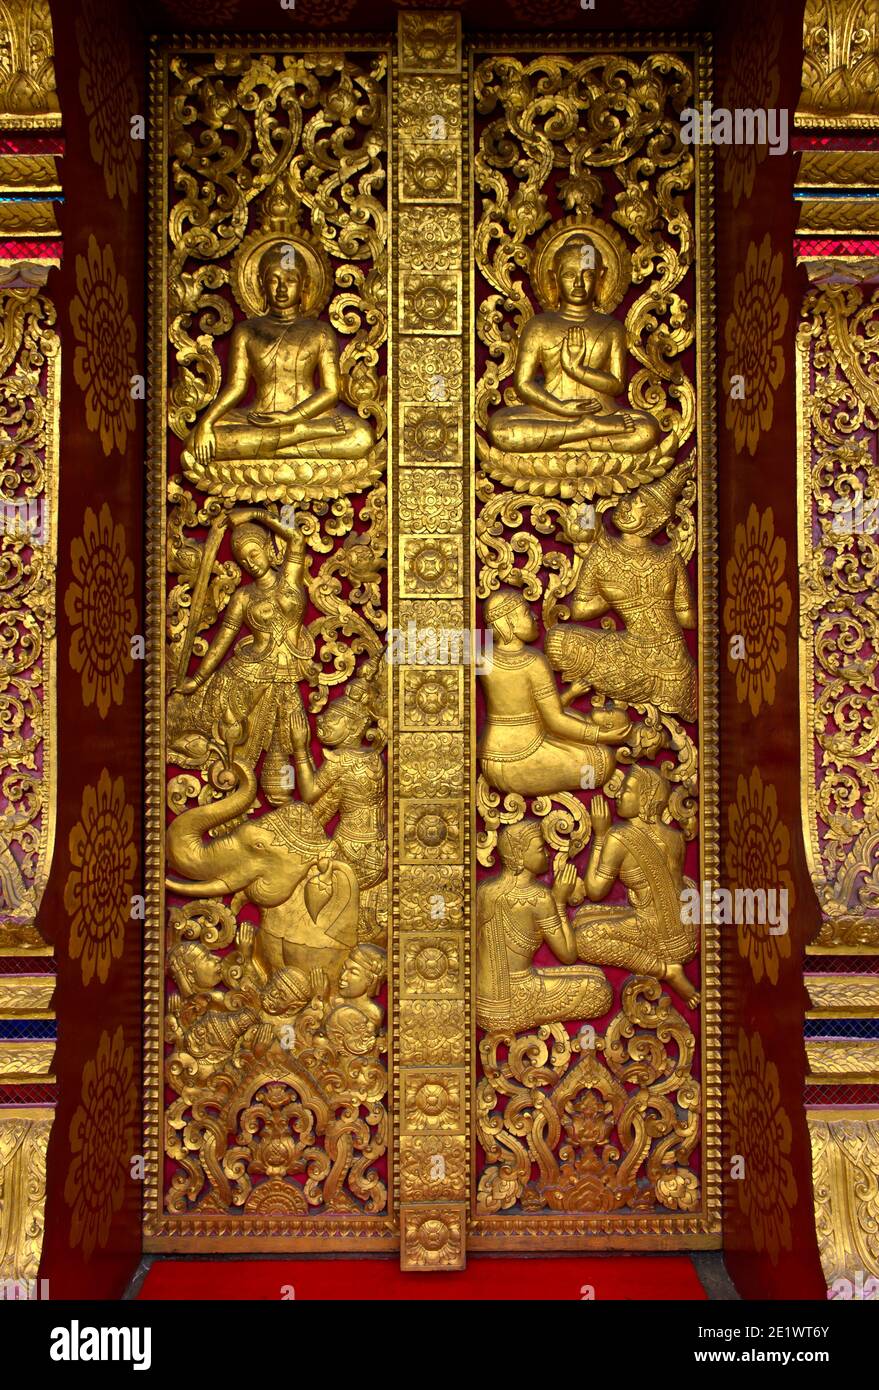 Eingangsportal mit vergoldeten Schnitzereien, die mythische Kreaturen und Szenen aus dem Leben Buddhas darstellen, Tempel Wat Nong Sikhounmuang, Luang Prabang, Laos Stockfoto